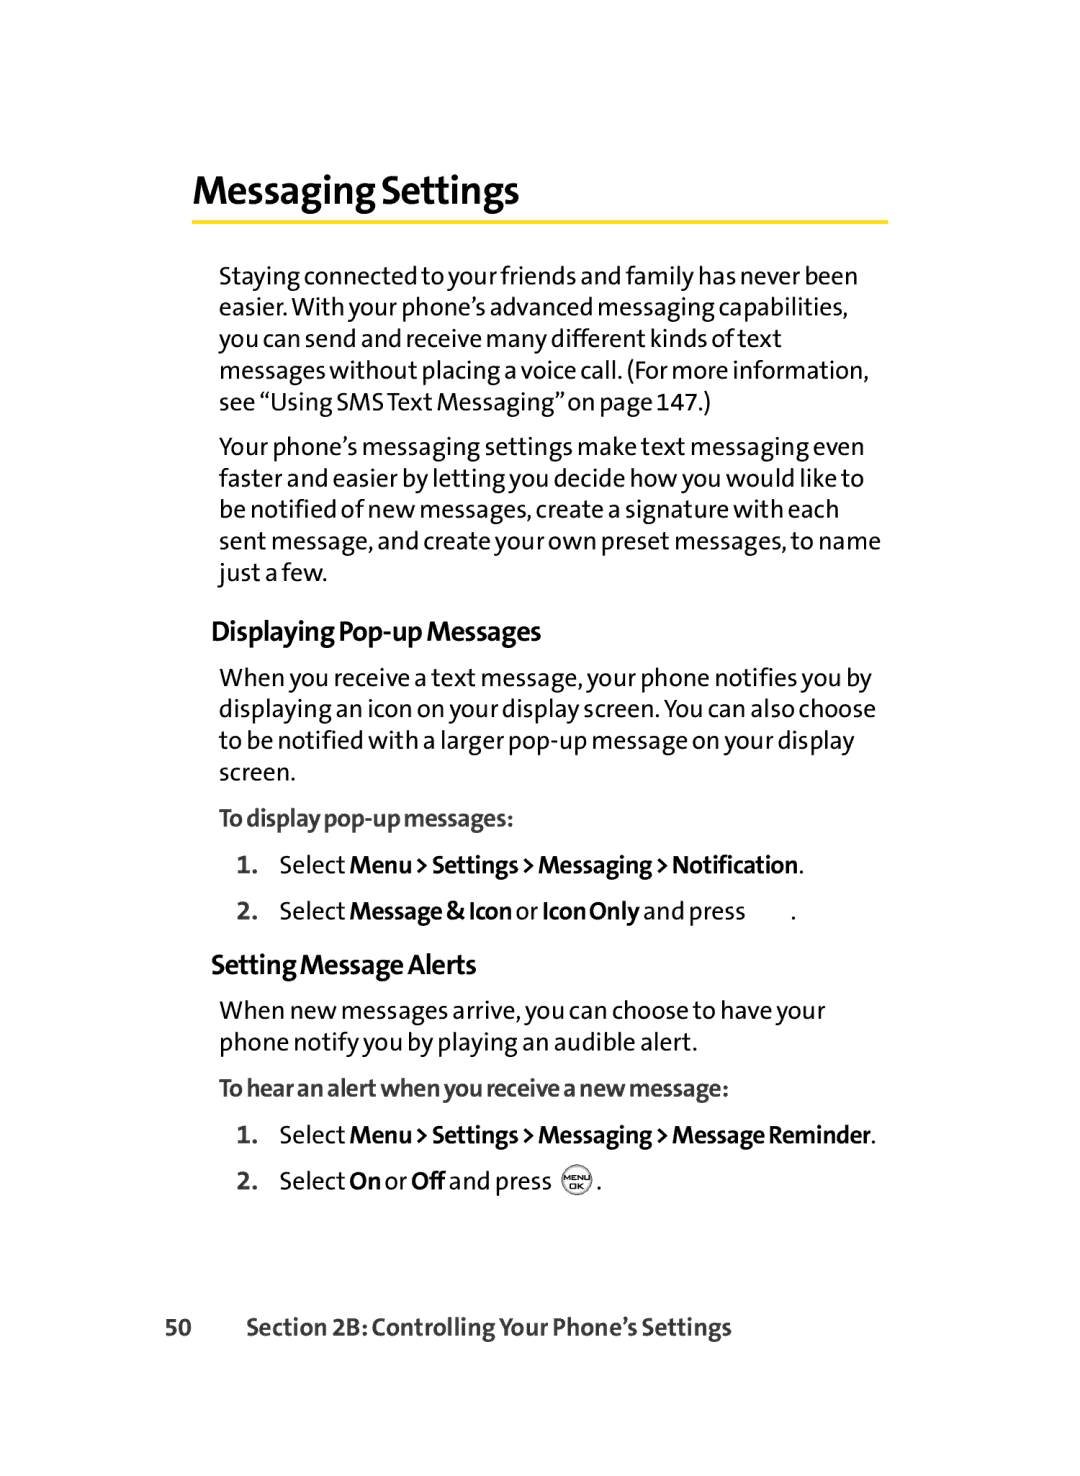 Sprint Nextel LX350 manual Messaging Settings, DisplayingPop-upMessages, SettingMessageAlerts, Todisplaypop-upmessages 